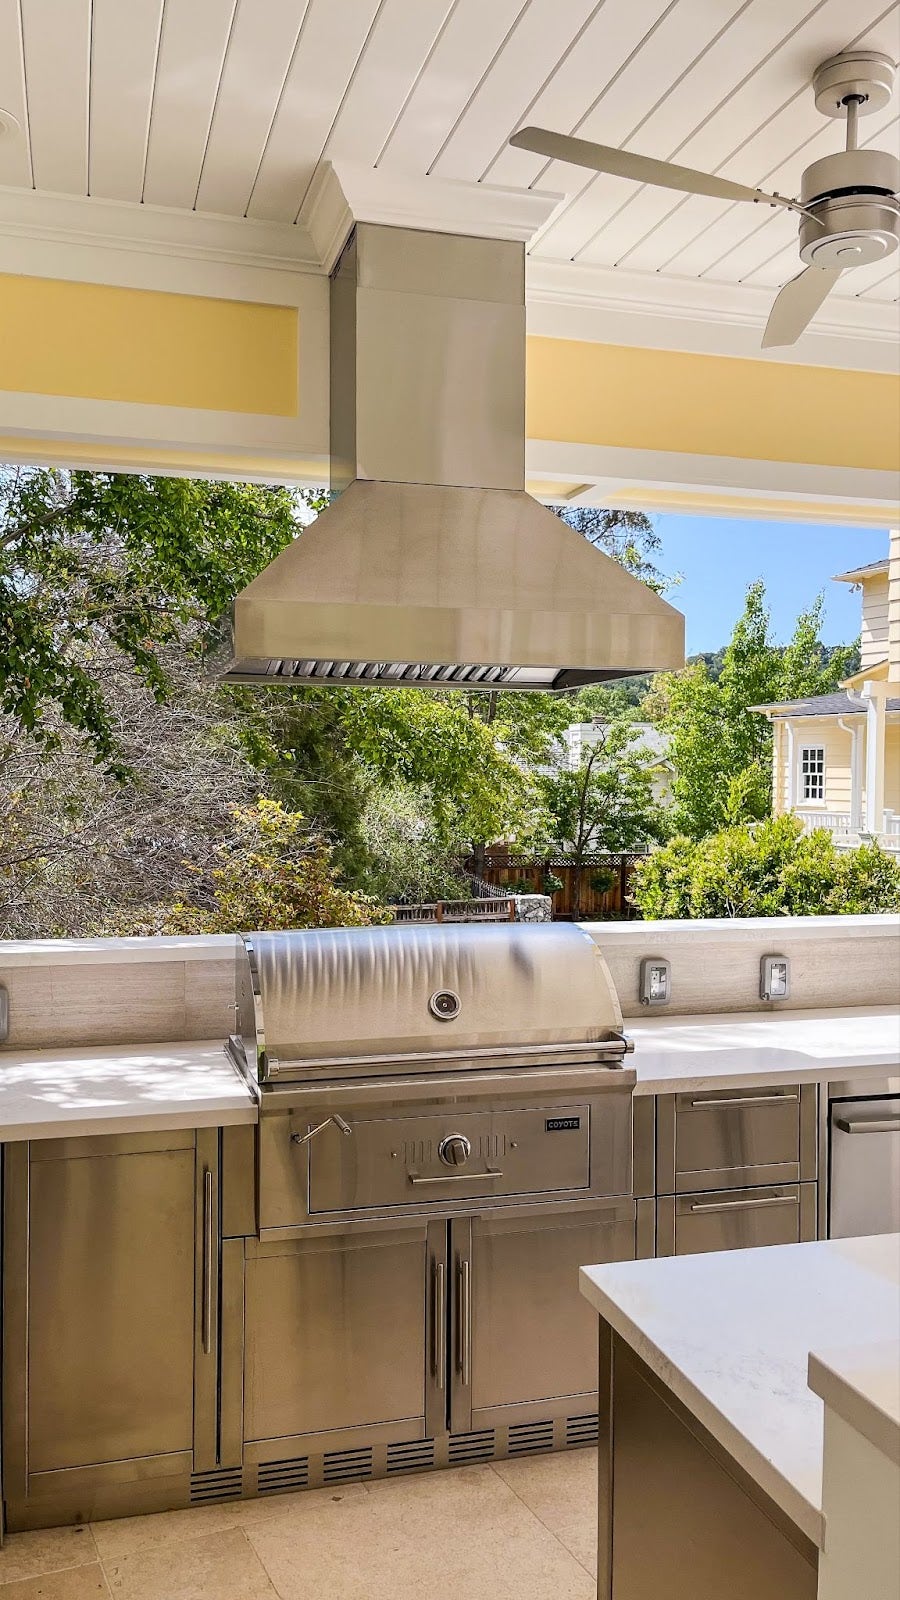 Modern Proline range hood in a beautifully designed outdoor kitchen with garden views - prolinerangehoods.com